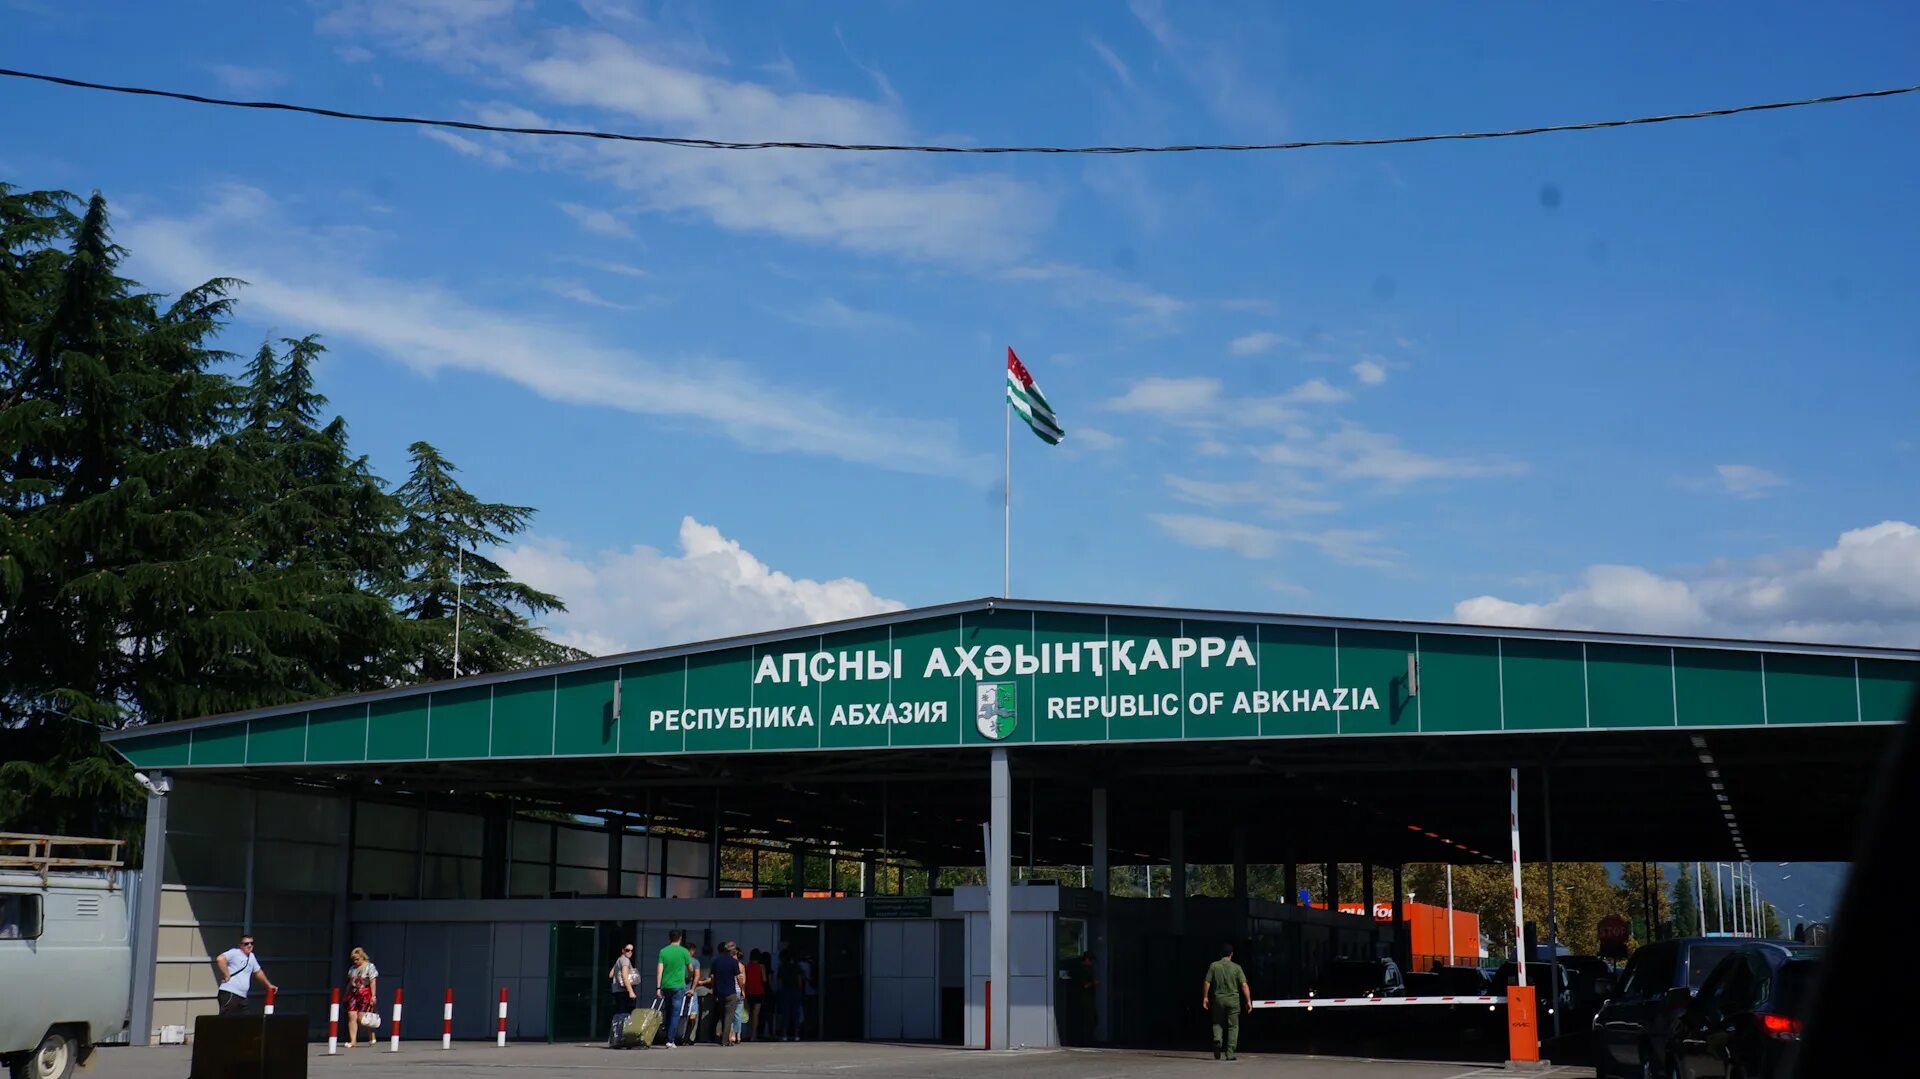 Таможня Сочи Абхазия. Псоу граница с Абхазией. Таможня граница Абхазия Адлер. Пограничная станция с Абхазией. Абхазия выезд за границу